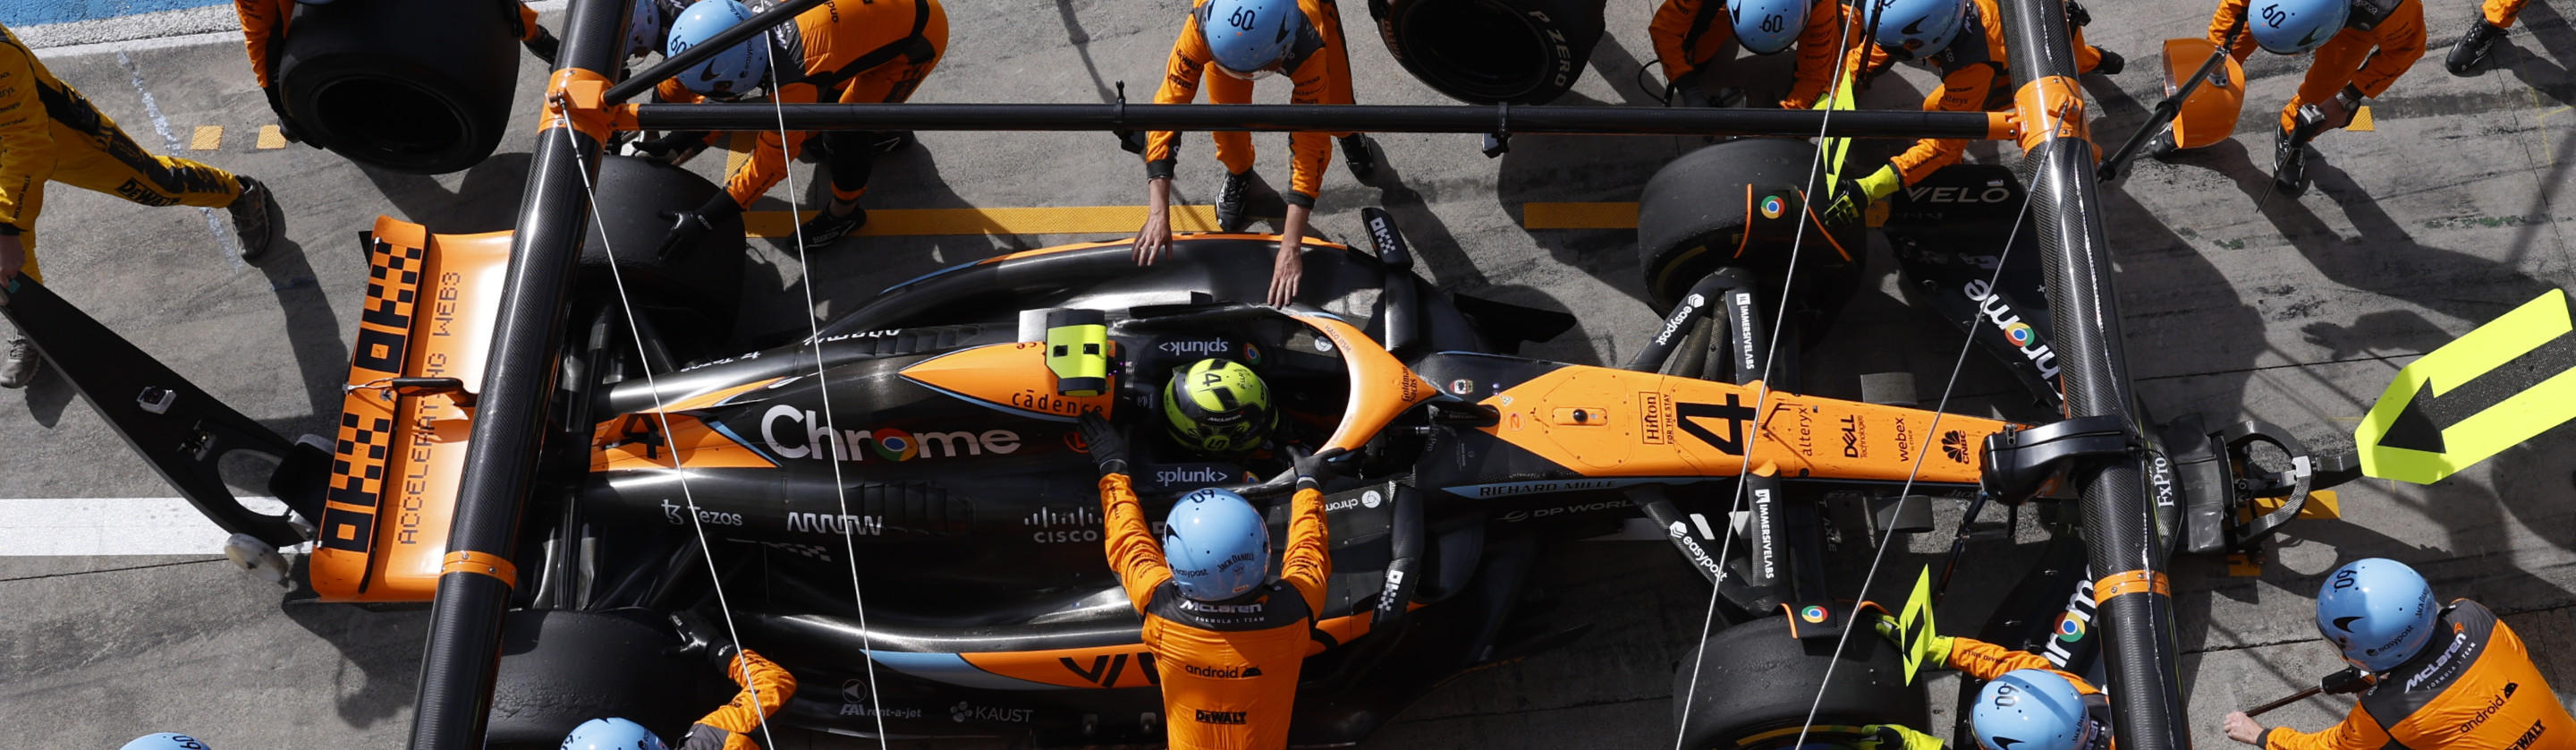 McLaren car being serviced by team